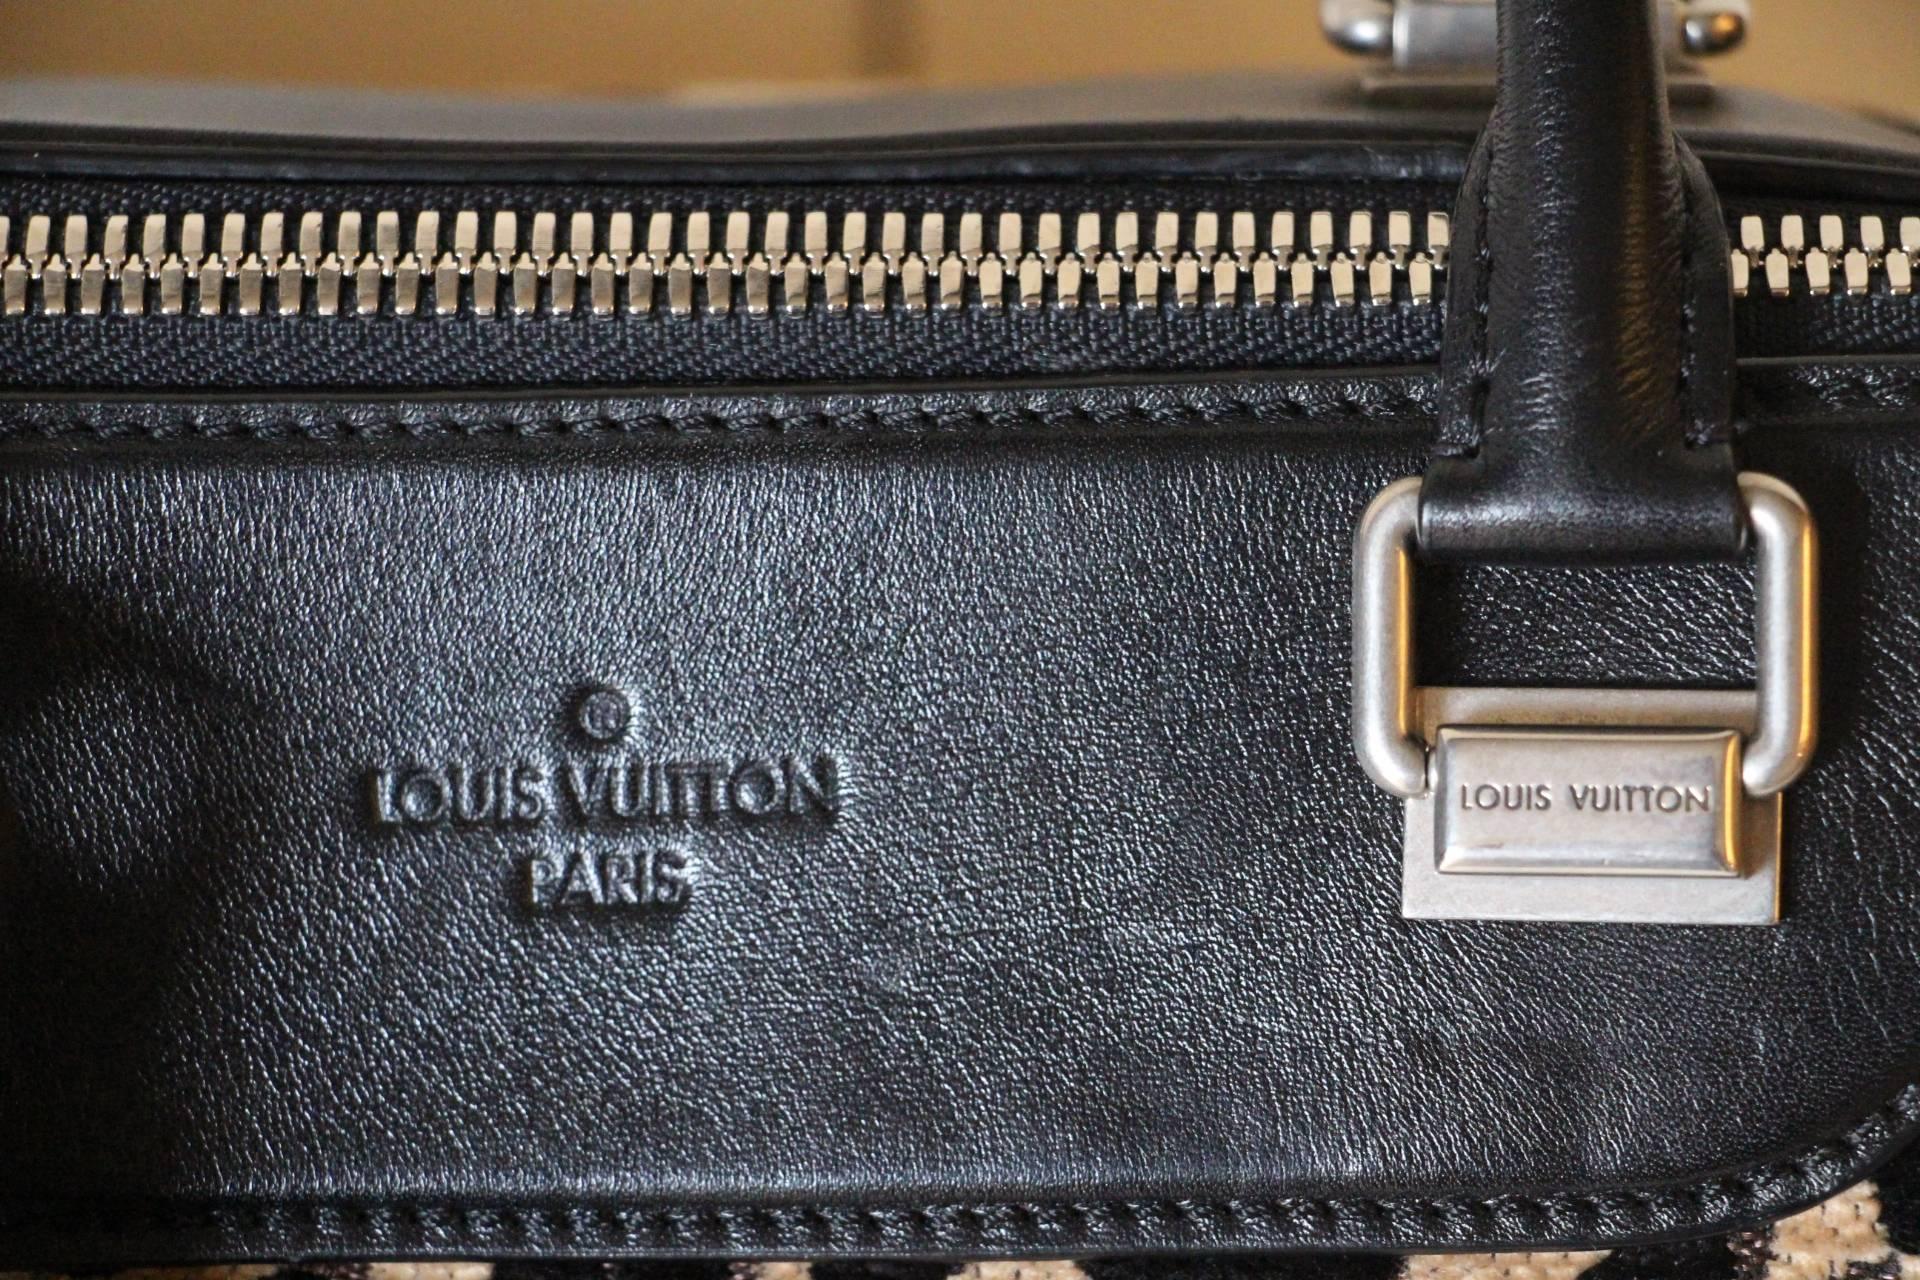 Contemporary Louis Vuitton Bag Limited Edition 